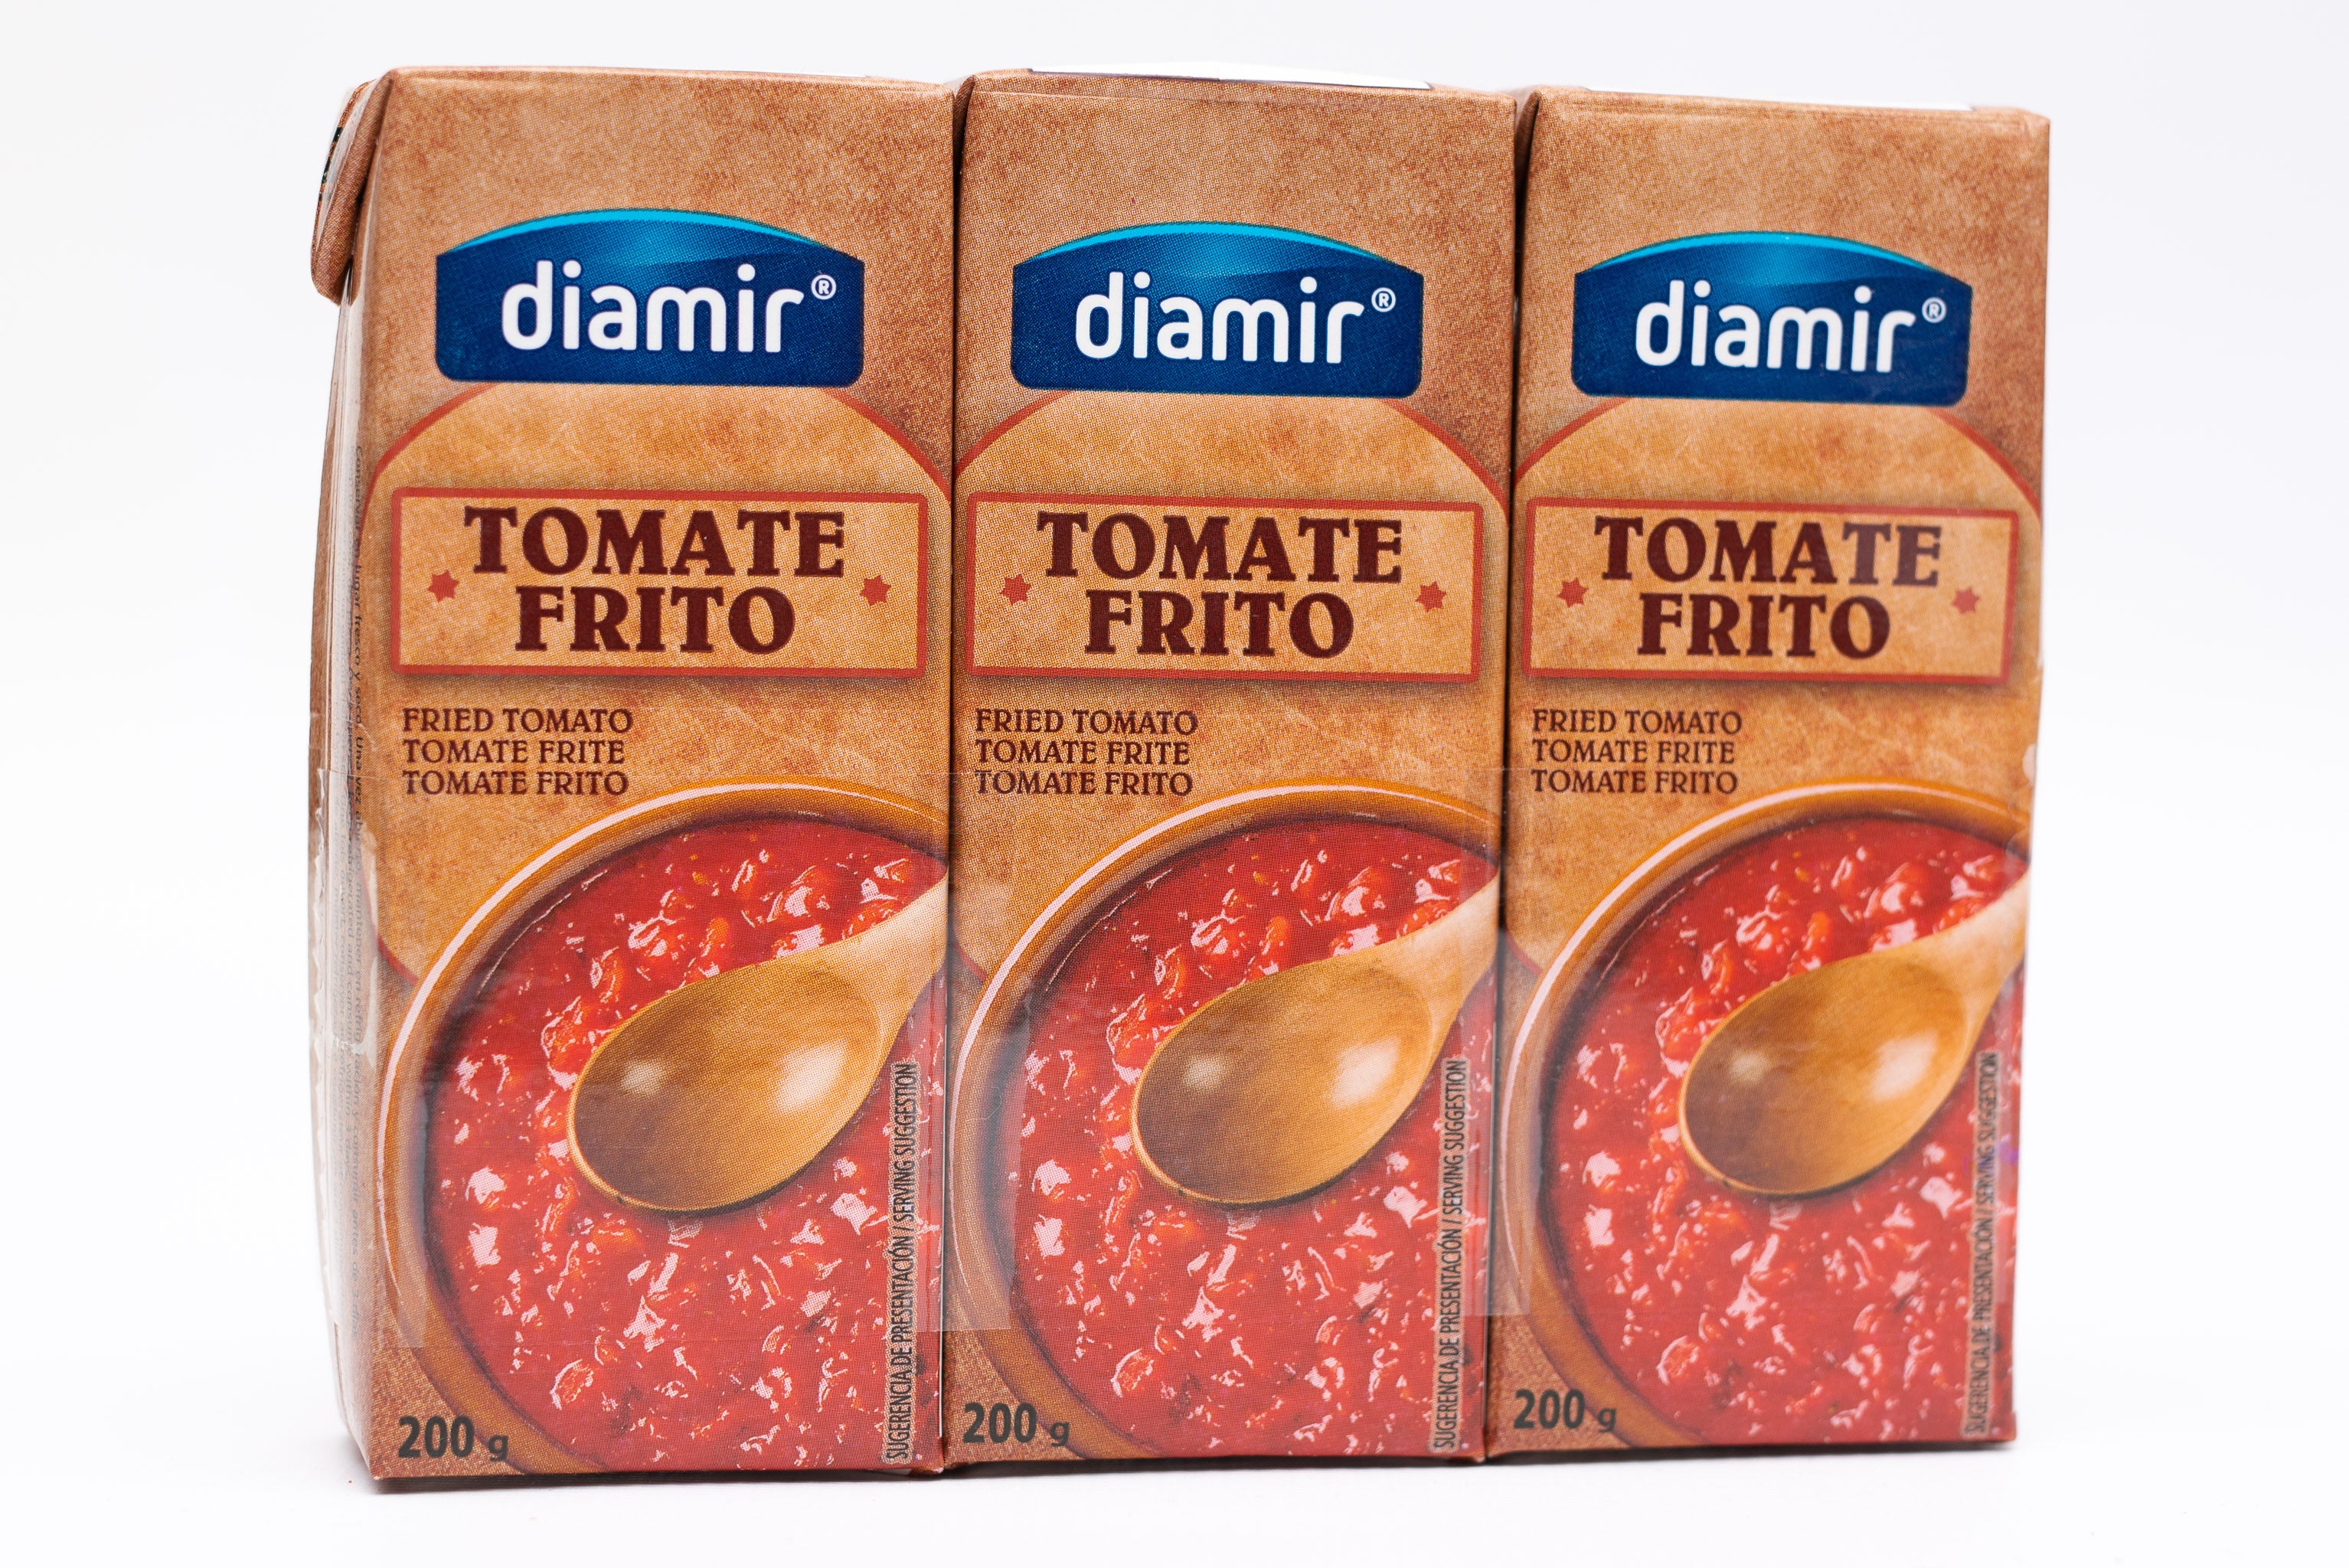 Tomate Frito Sieved Tomato - 200g x 3 units pack